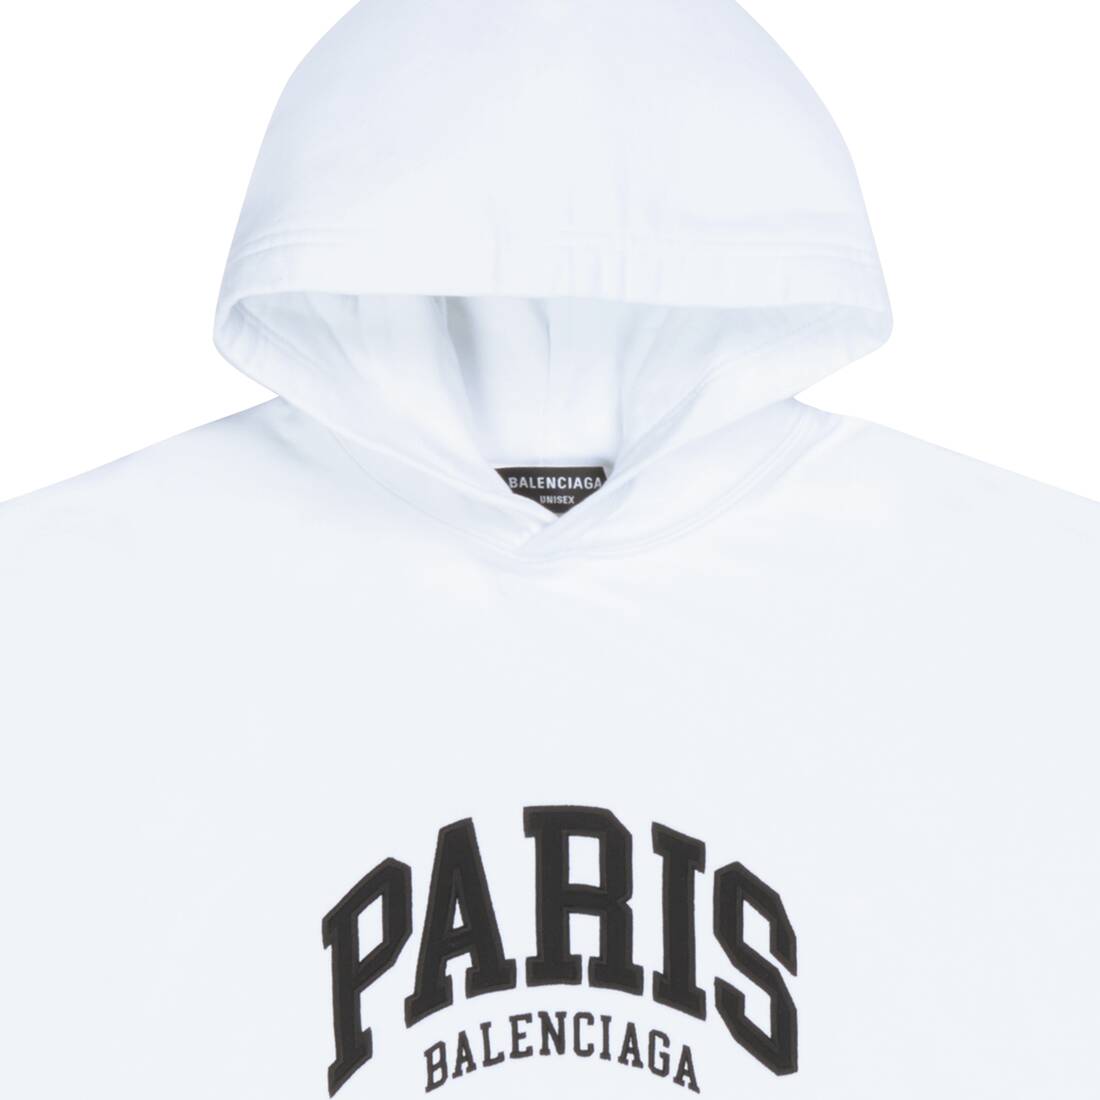 BALENCIAGA cotton sweatshirt  Black  Balenciaga sweatshirt 697869 TKVI9  online on GIGLIOCOM